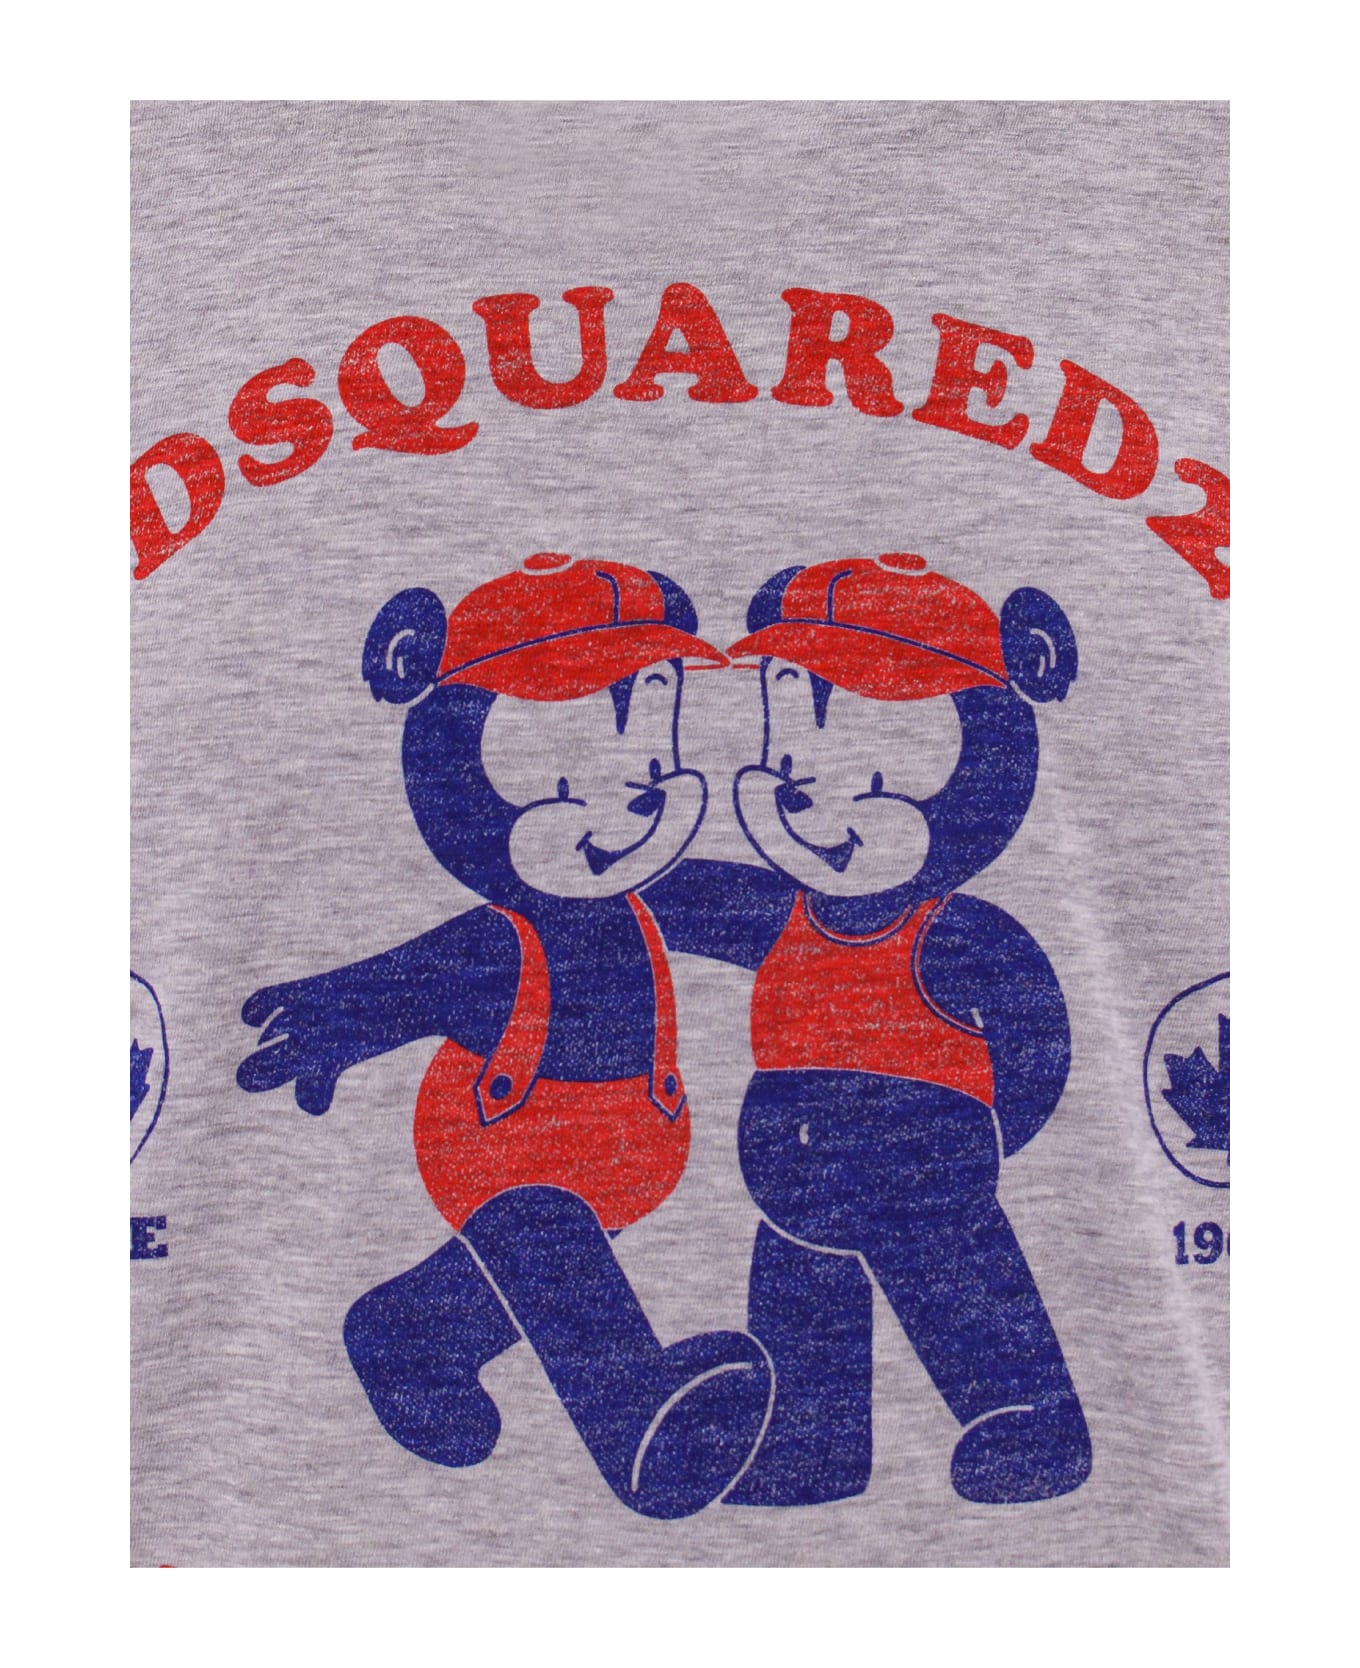 Dsquared2 T-shirt - Grey シャツ